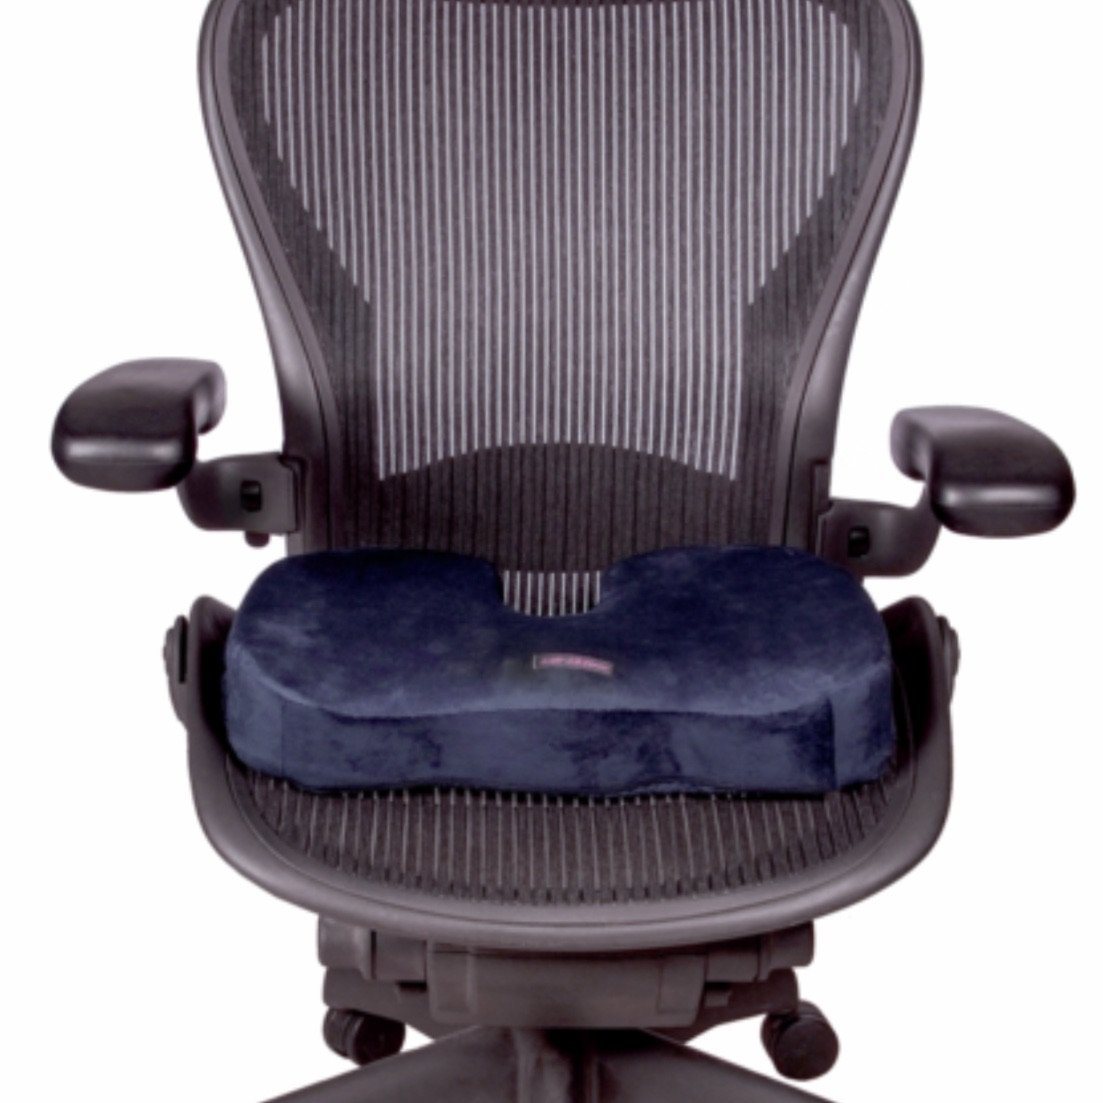 Solace "Select" Non-slip Orthopedic Seat Cushion